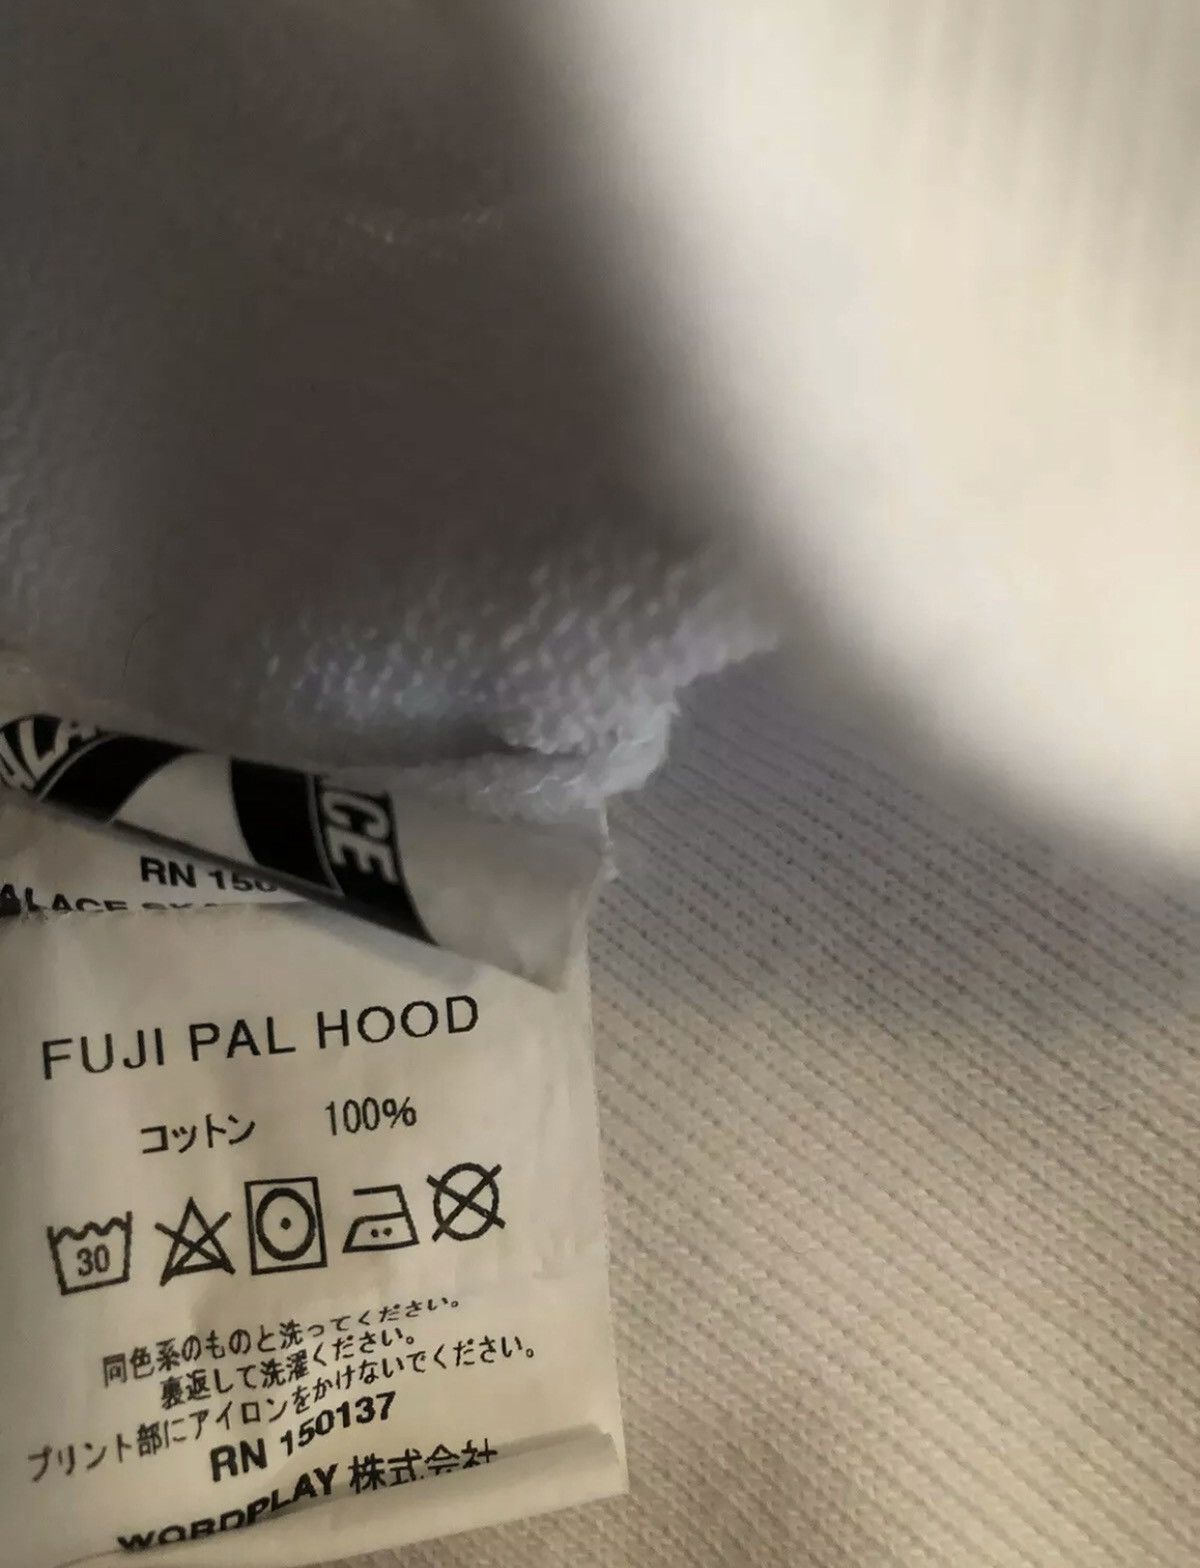 Palace Fuji Pal - Hoodie Tokyo Exclusive Size US M / EU 48-50 / 2 - 3 Thumbnail